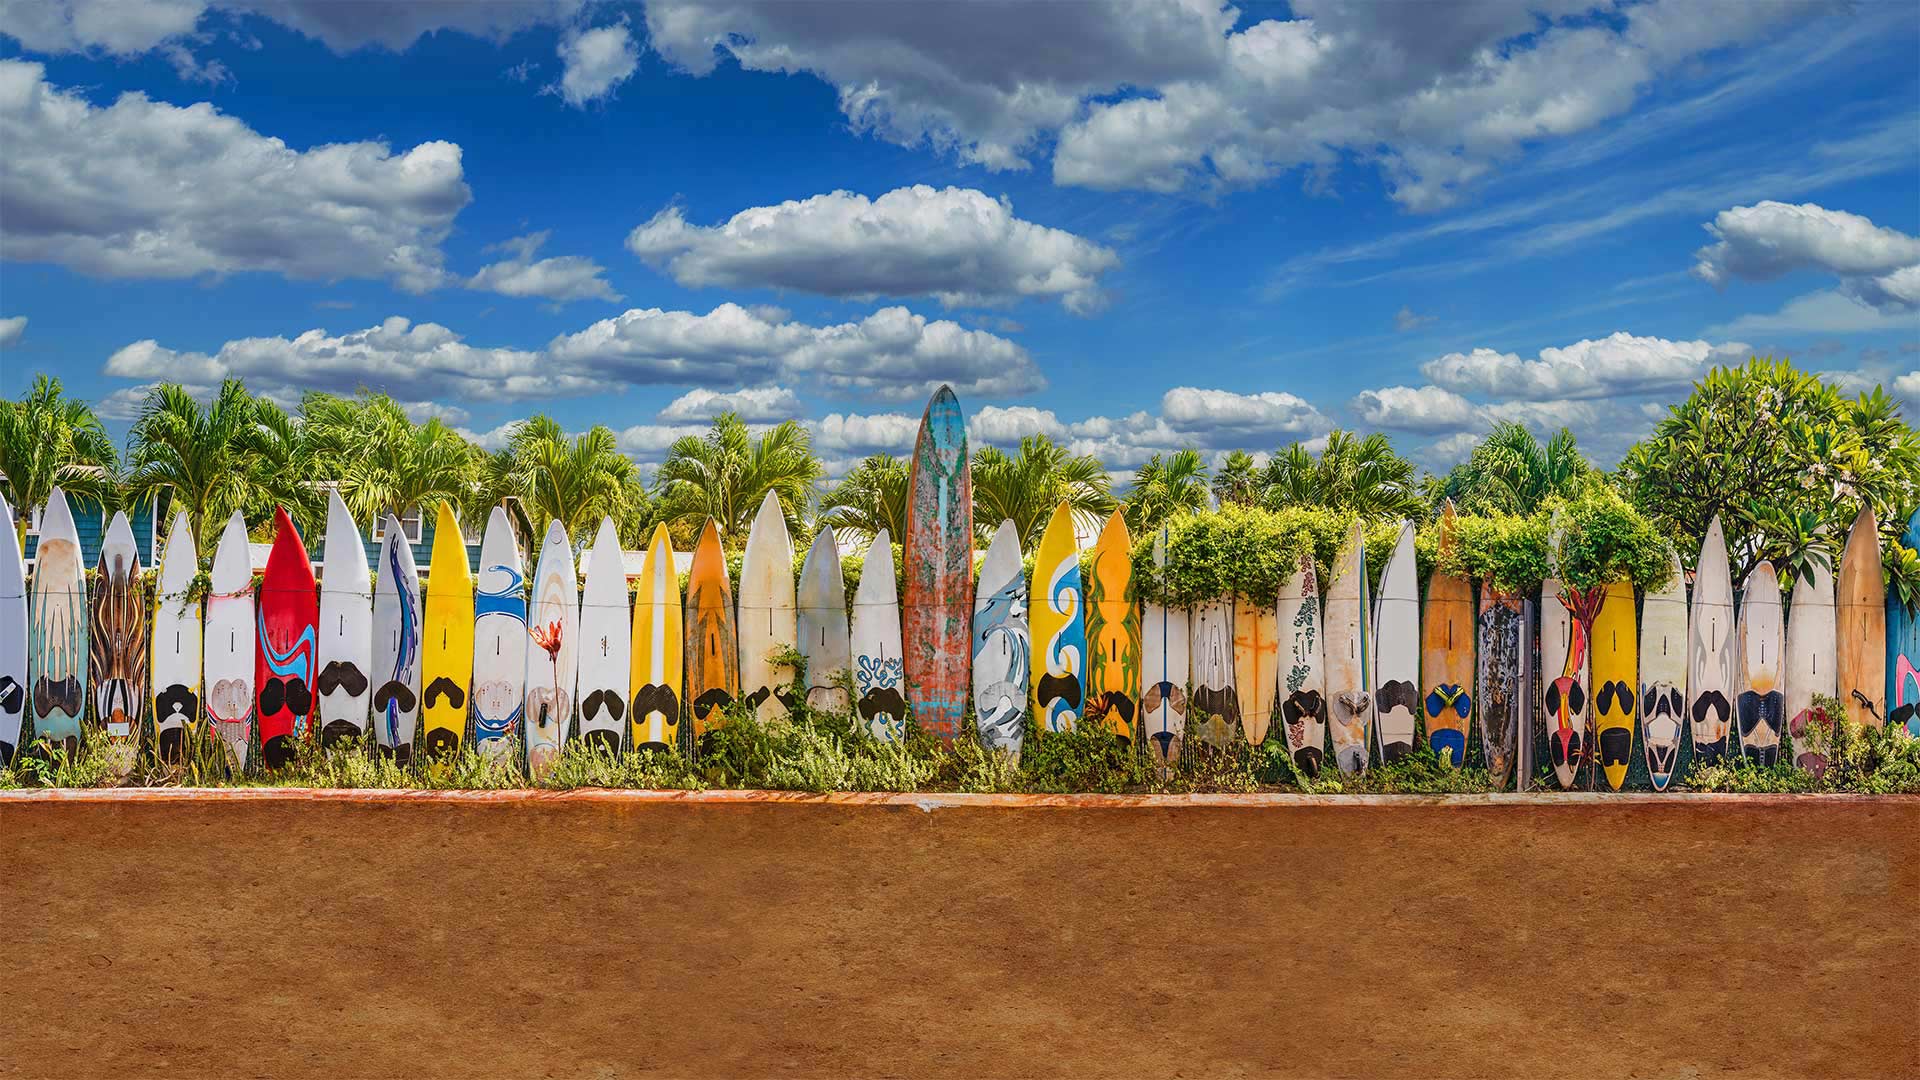 A surfboard fence near Paia, Maui, Hawaii (? Matt Anderson Photography/Getty Images)